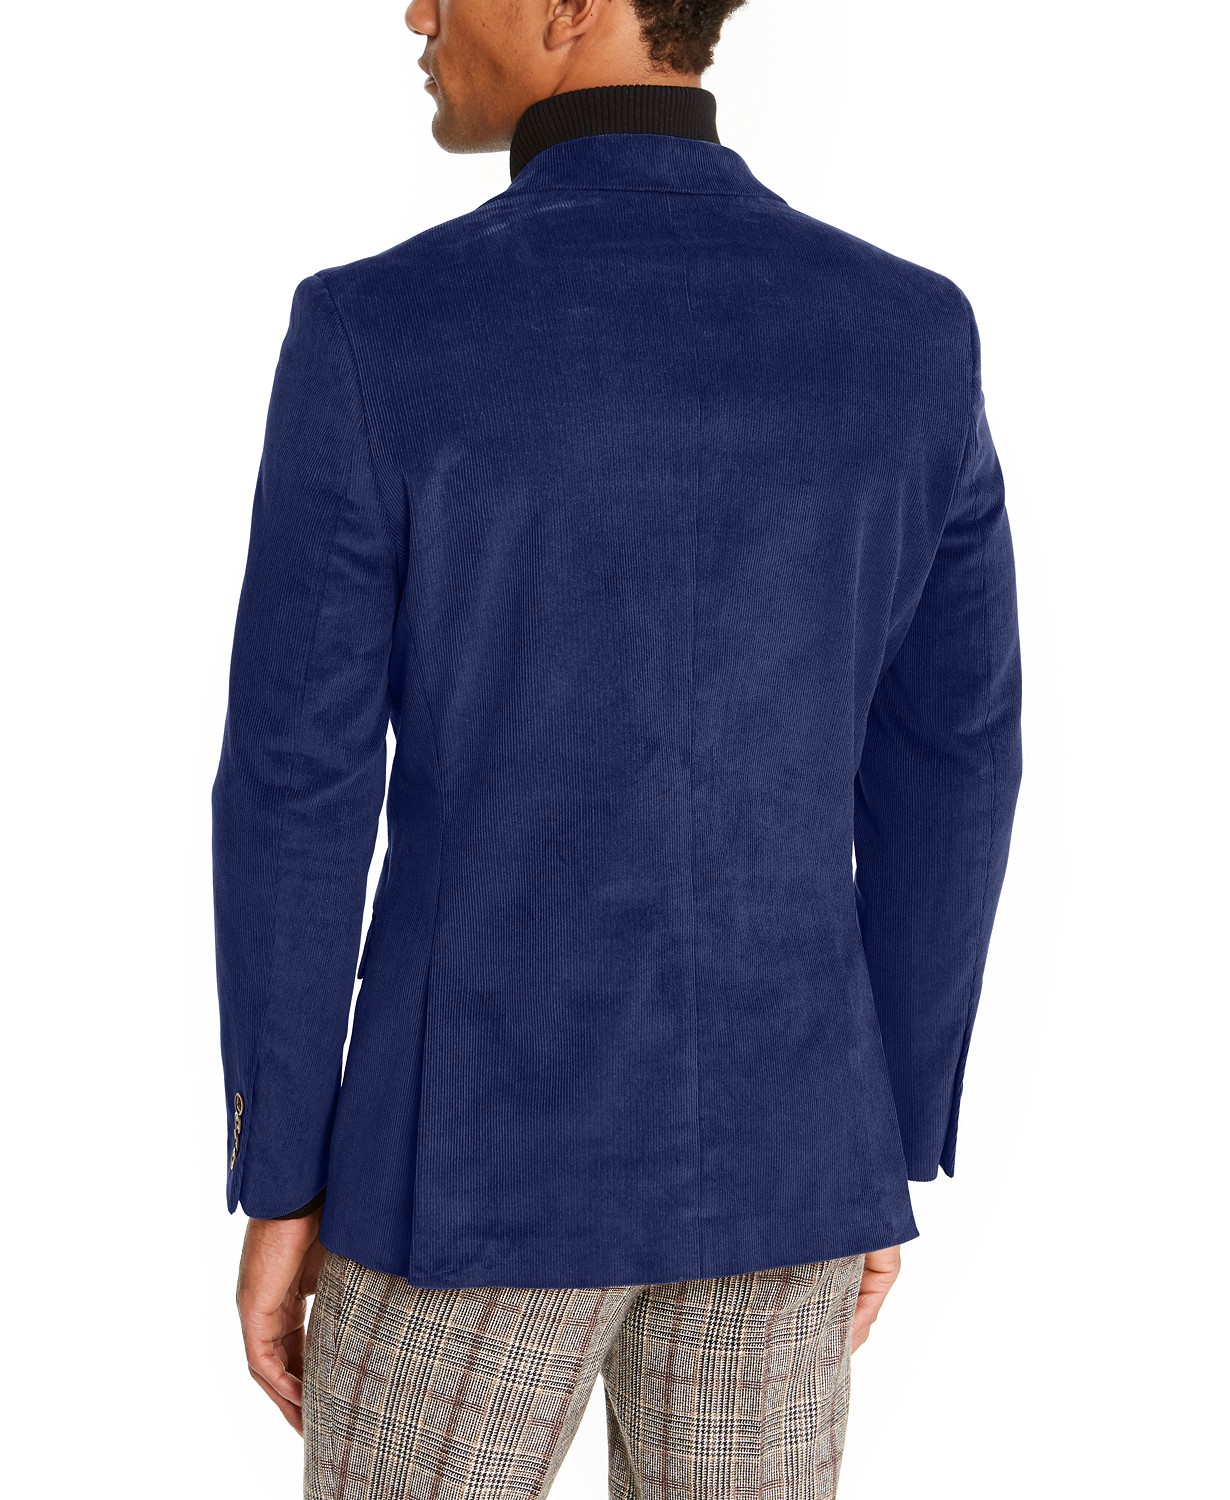 www.couturepoint.com-nautica-mens-blue-modern-fit-active-stretch-corduroy-short-sport-coat-blazer